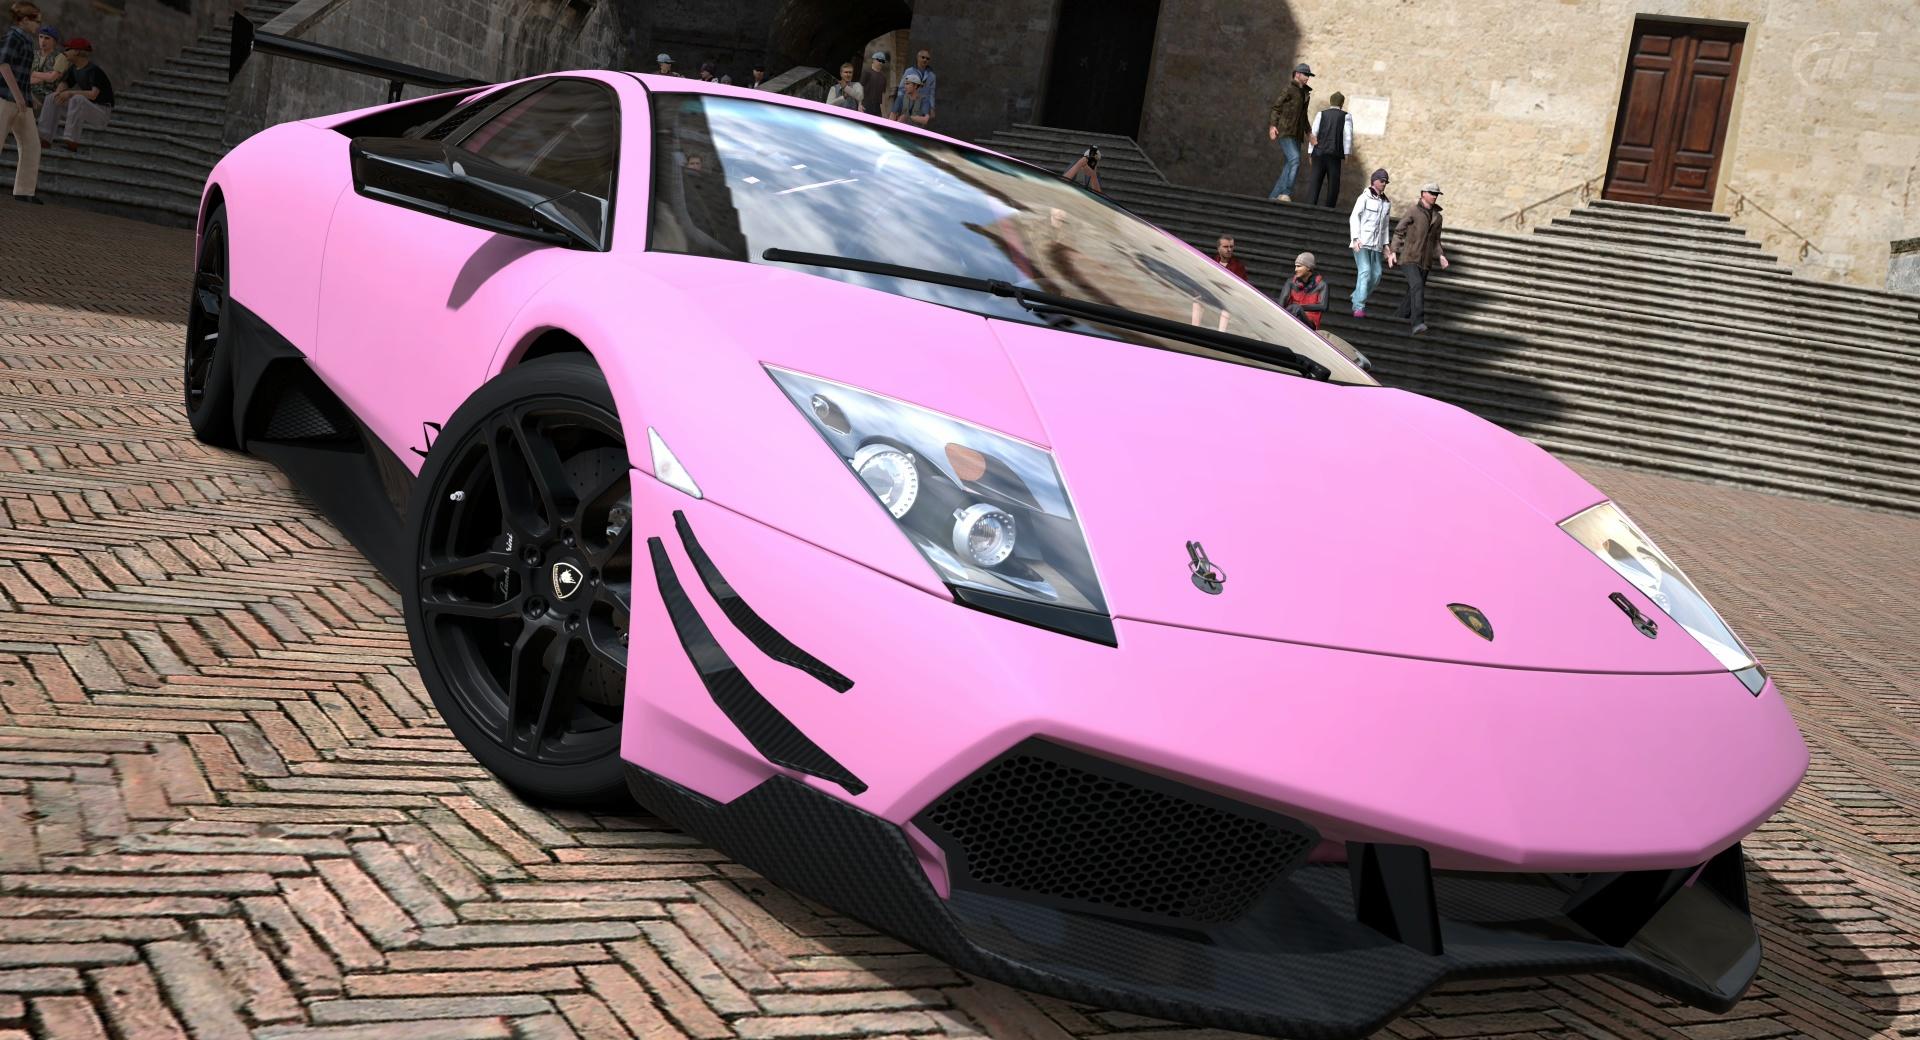 Lamborghini Murcielago LP670-4 SV Matte Pink at 1024 x 1024 iPad size wallpapers HD quality